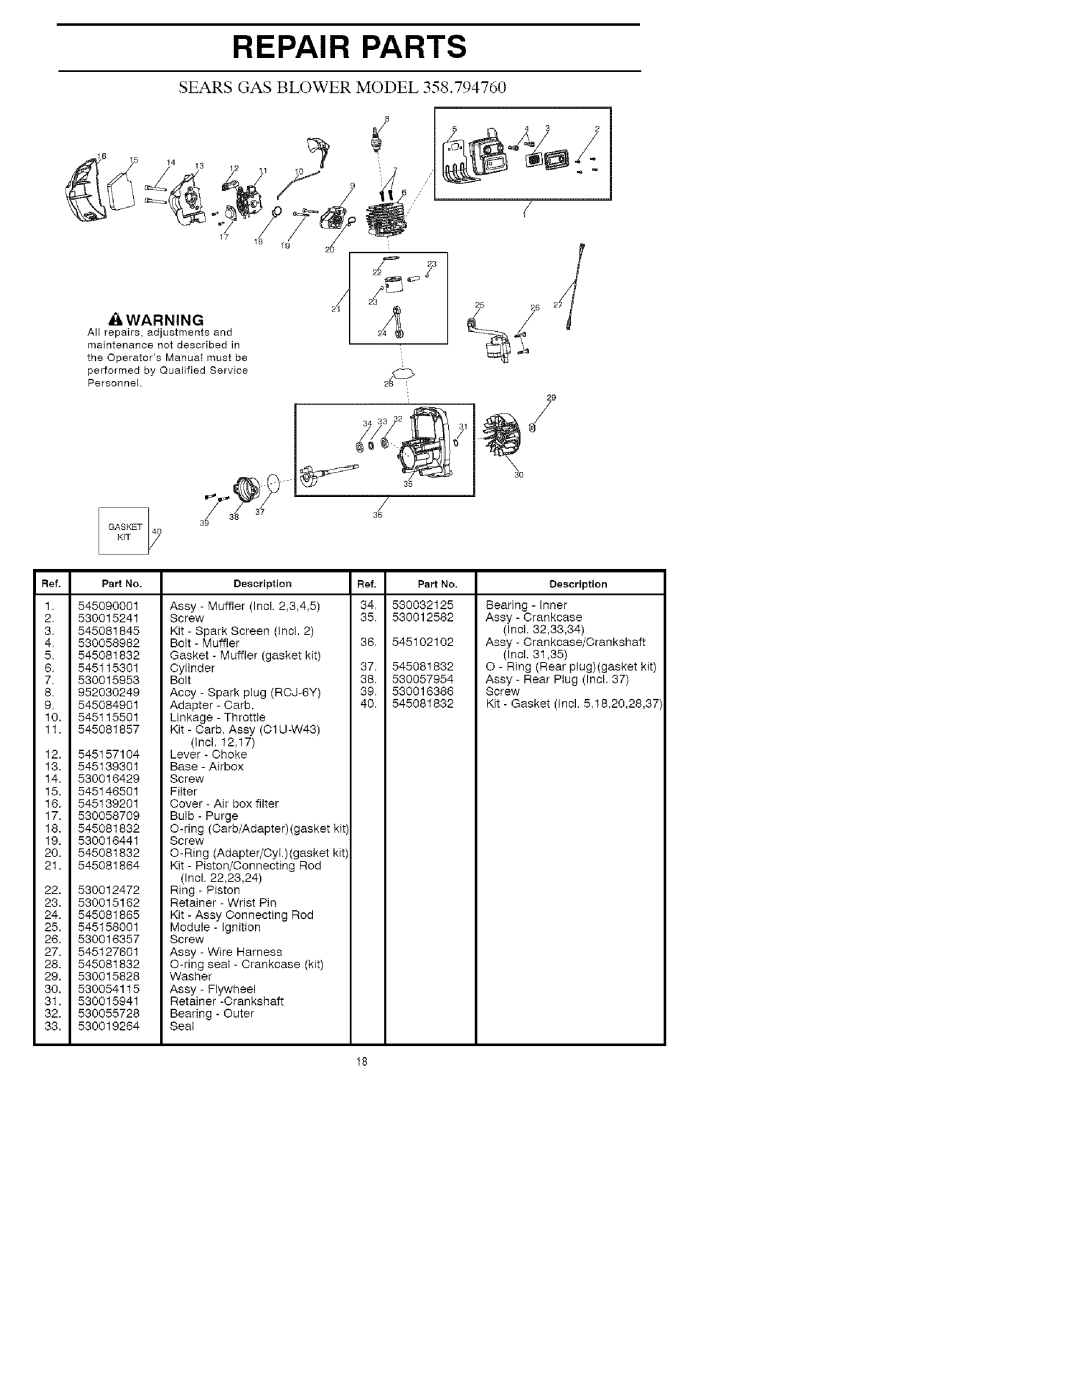 Craftsman 358.79476 manual Repair Parts, =/=F=¢ z, Sears Gas Blower Model, _Lwarning 